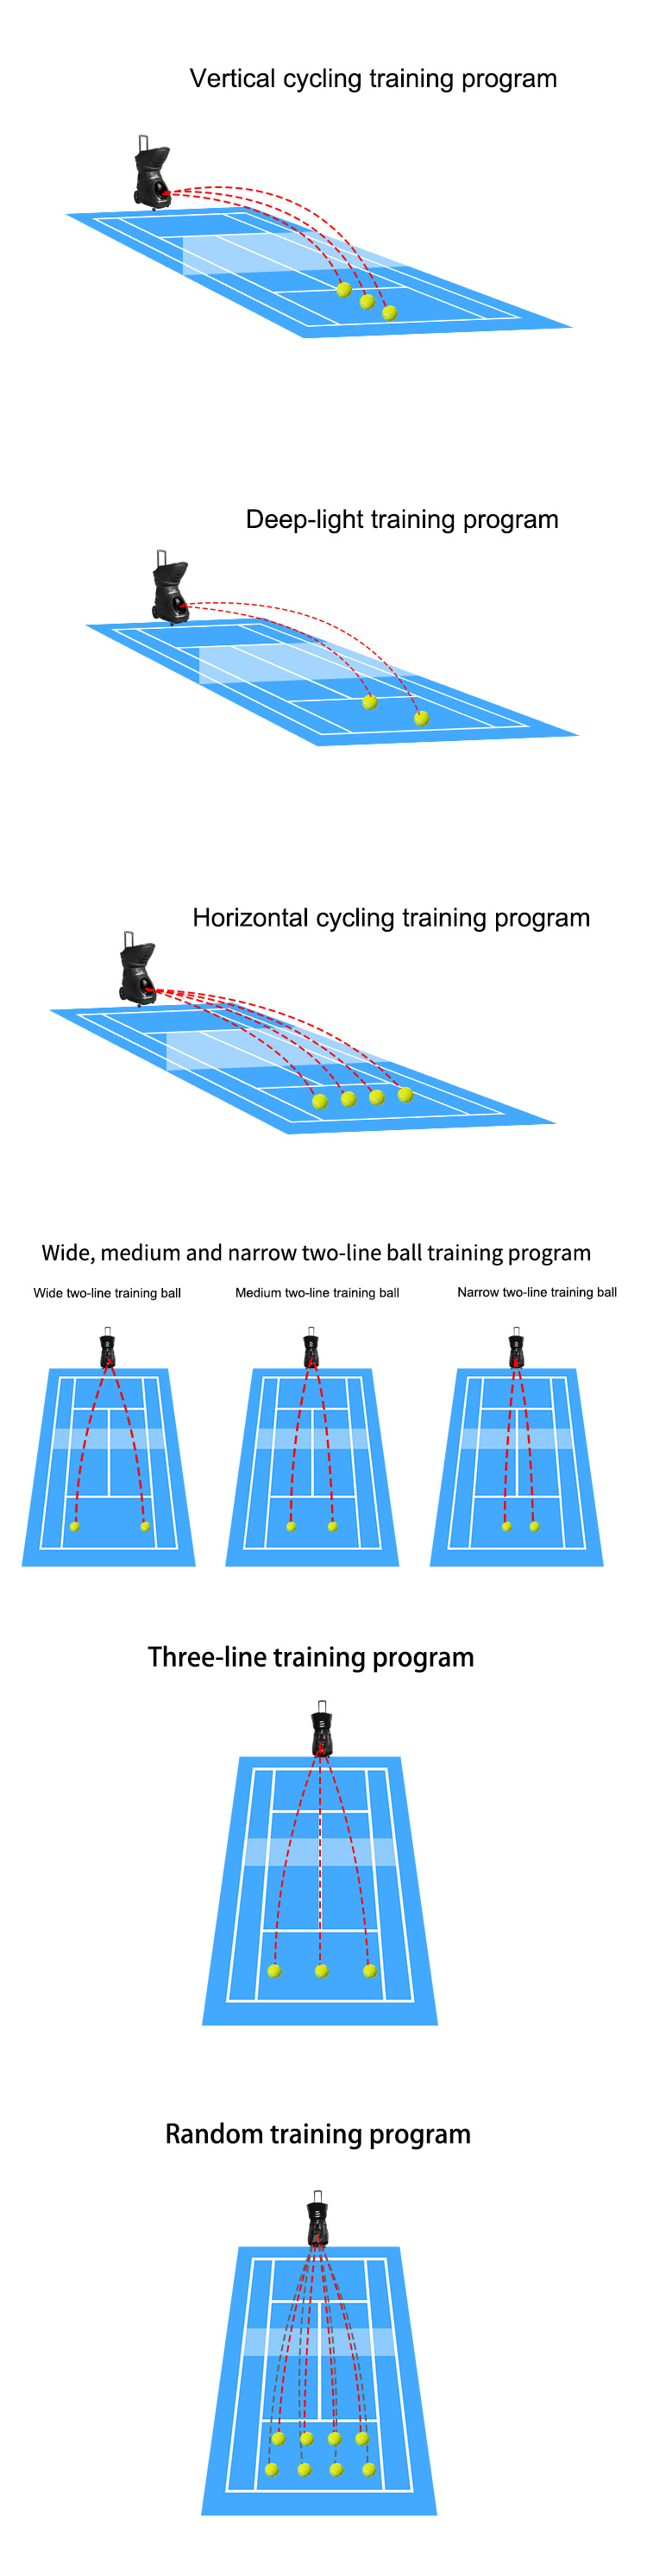 Tennis ball training machine manufacturing